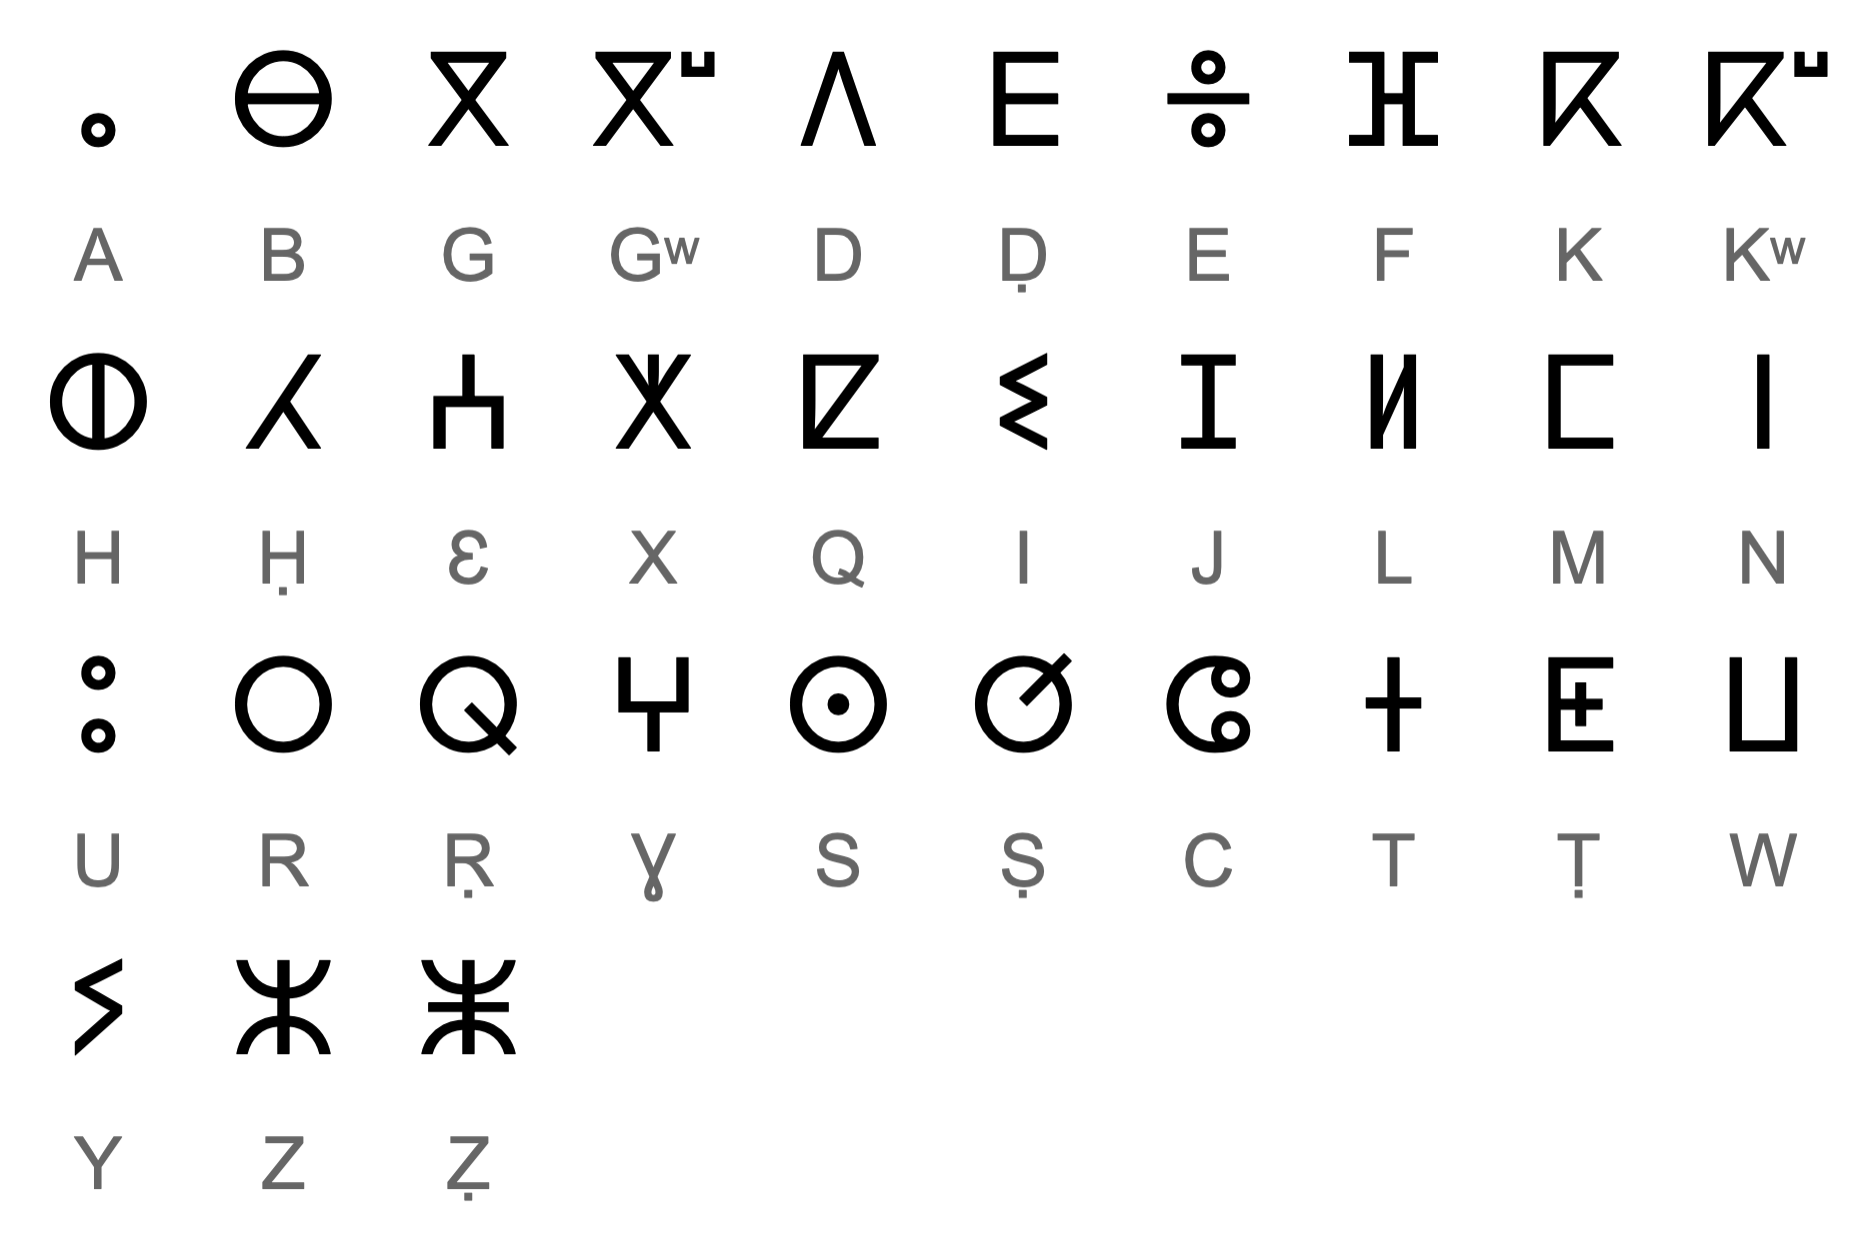 Berber (Tifinagh) alphabet sample